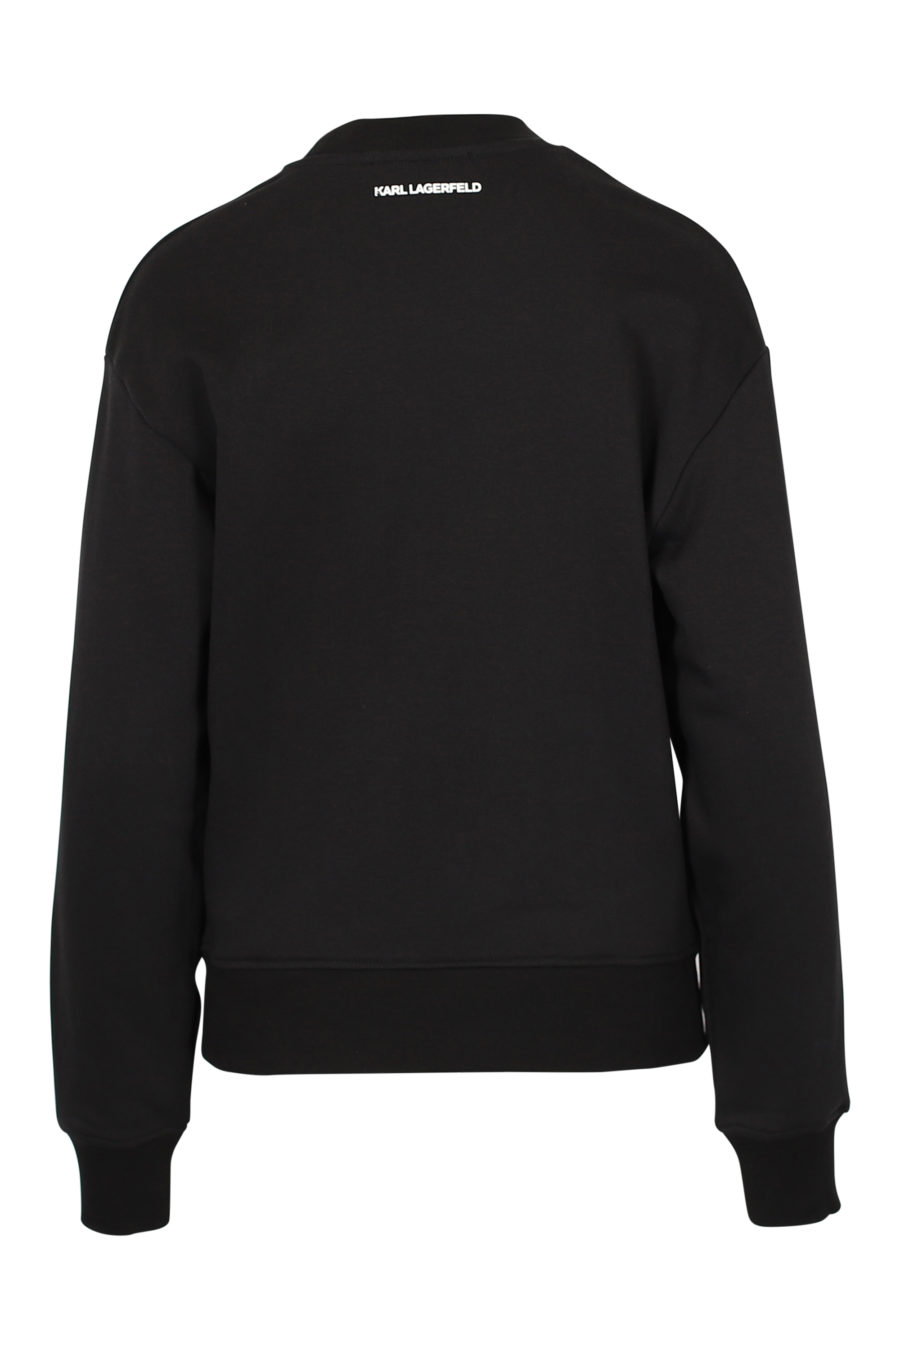 Schwarzes Sweatshirt mit "Ikonik"-Design - IMG 3061